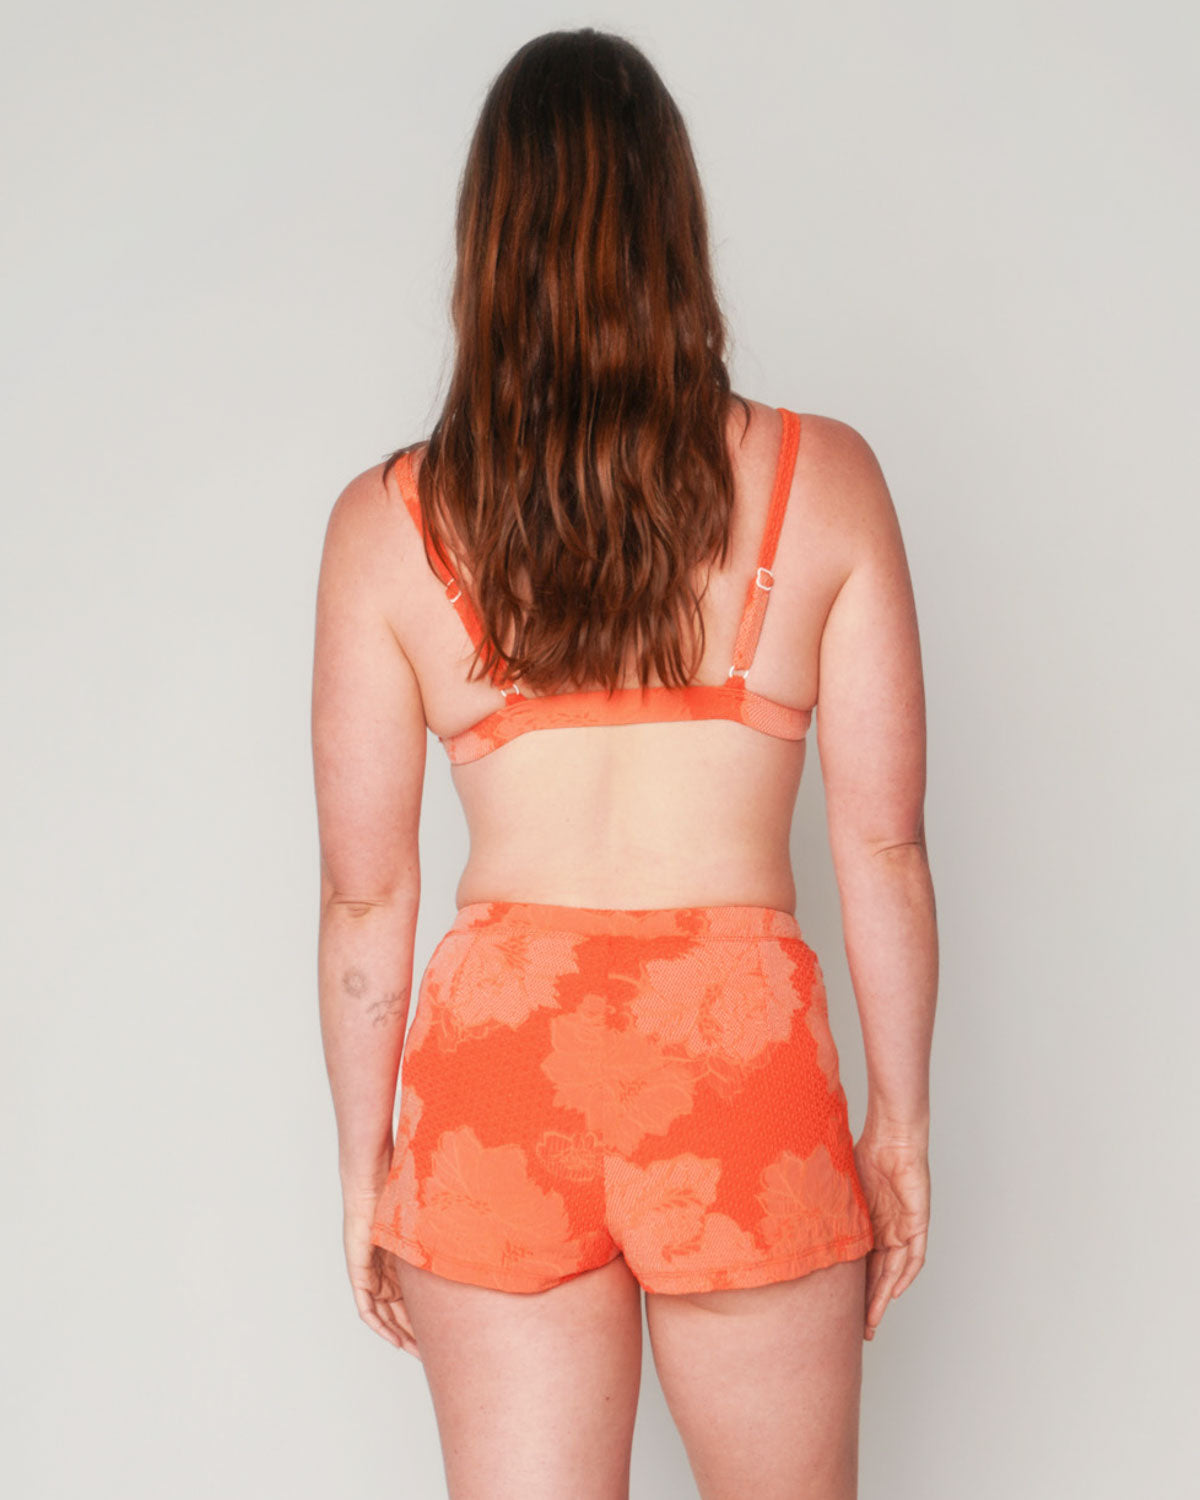 Bobby Squeeze Orange Textured Floral Pattern Bikini Top Swim Suit